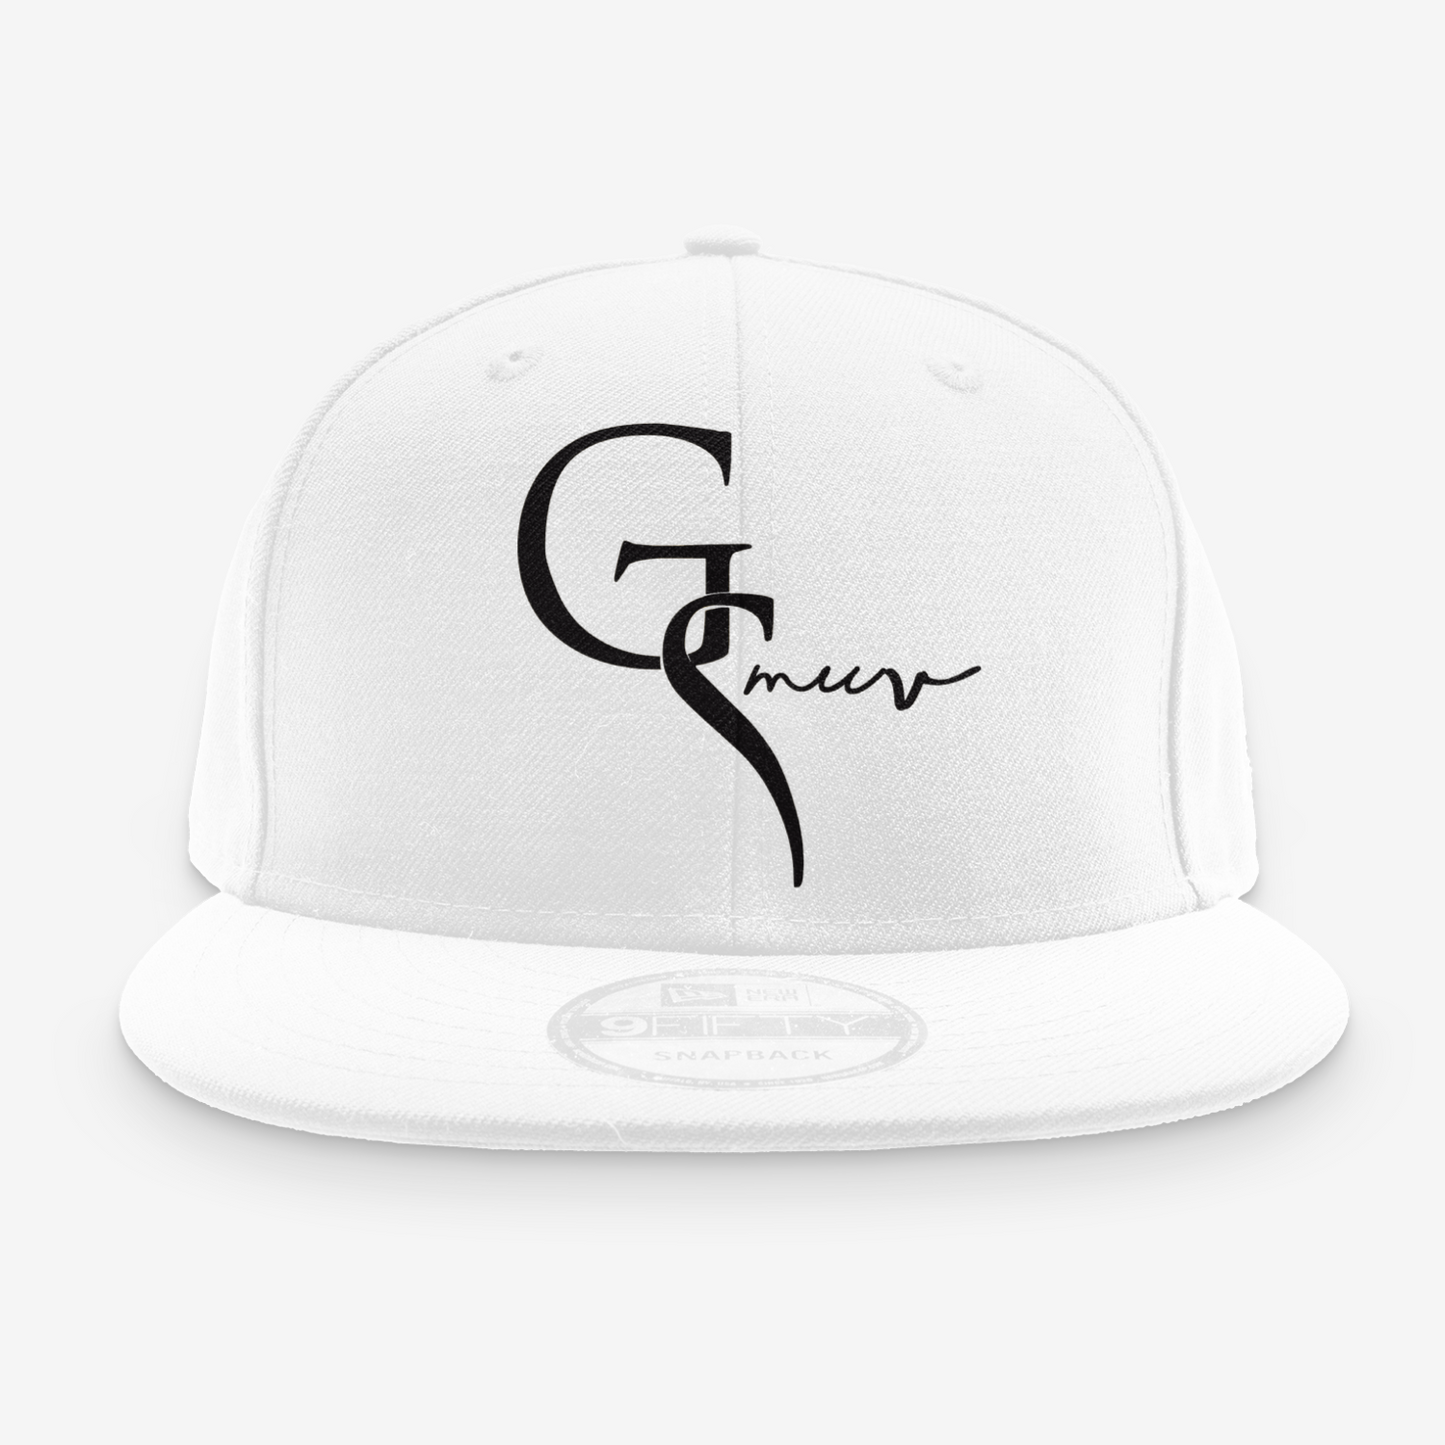 White New Era Hat with logo of GSMUV